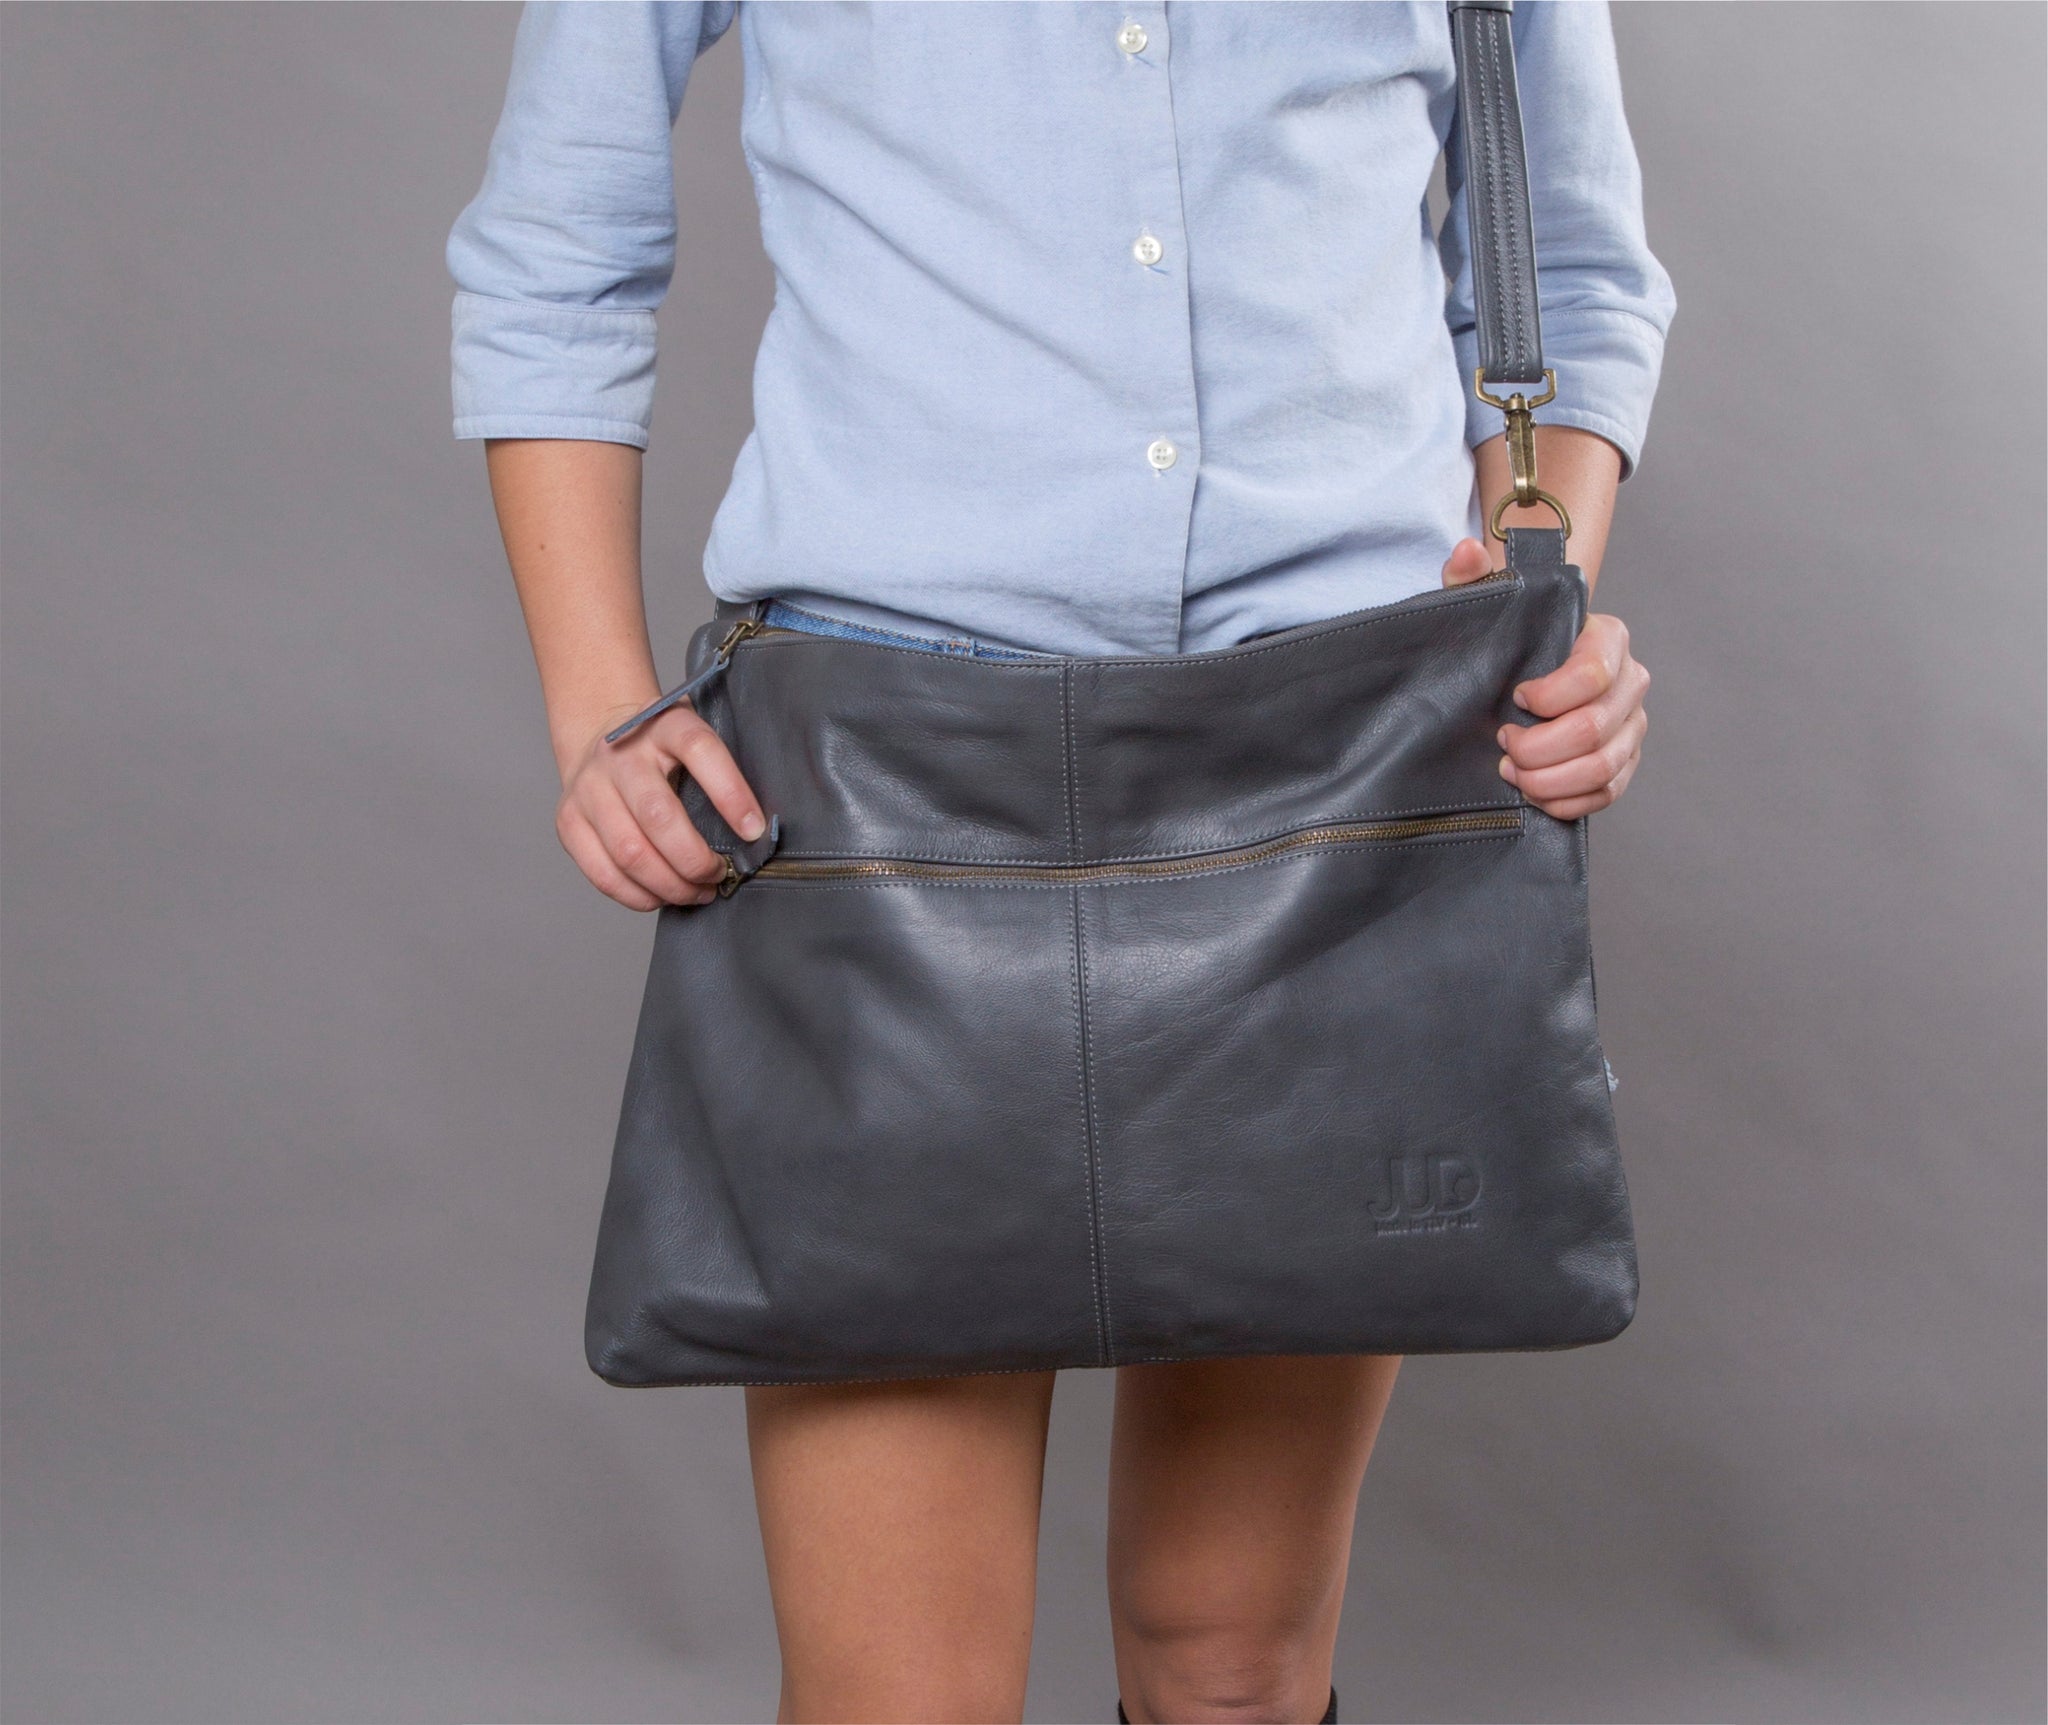 Best Black Designer Crossbody Bag | Small Black Leather Crossbody Bag